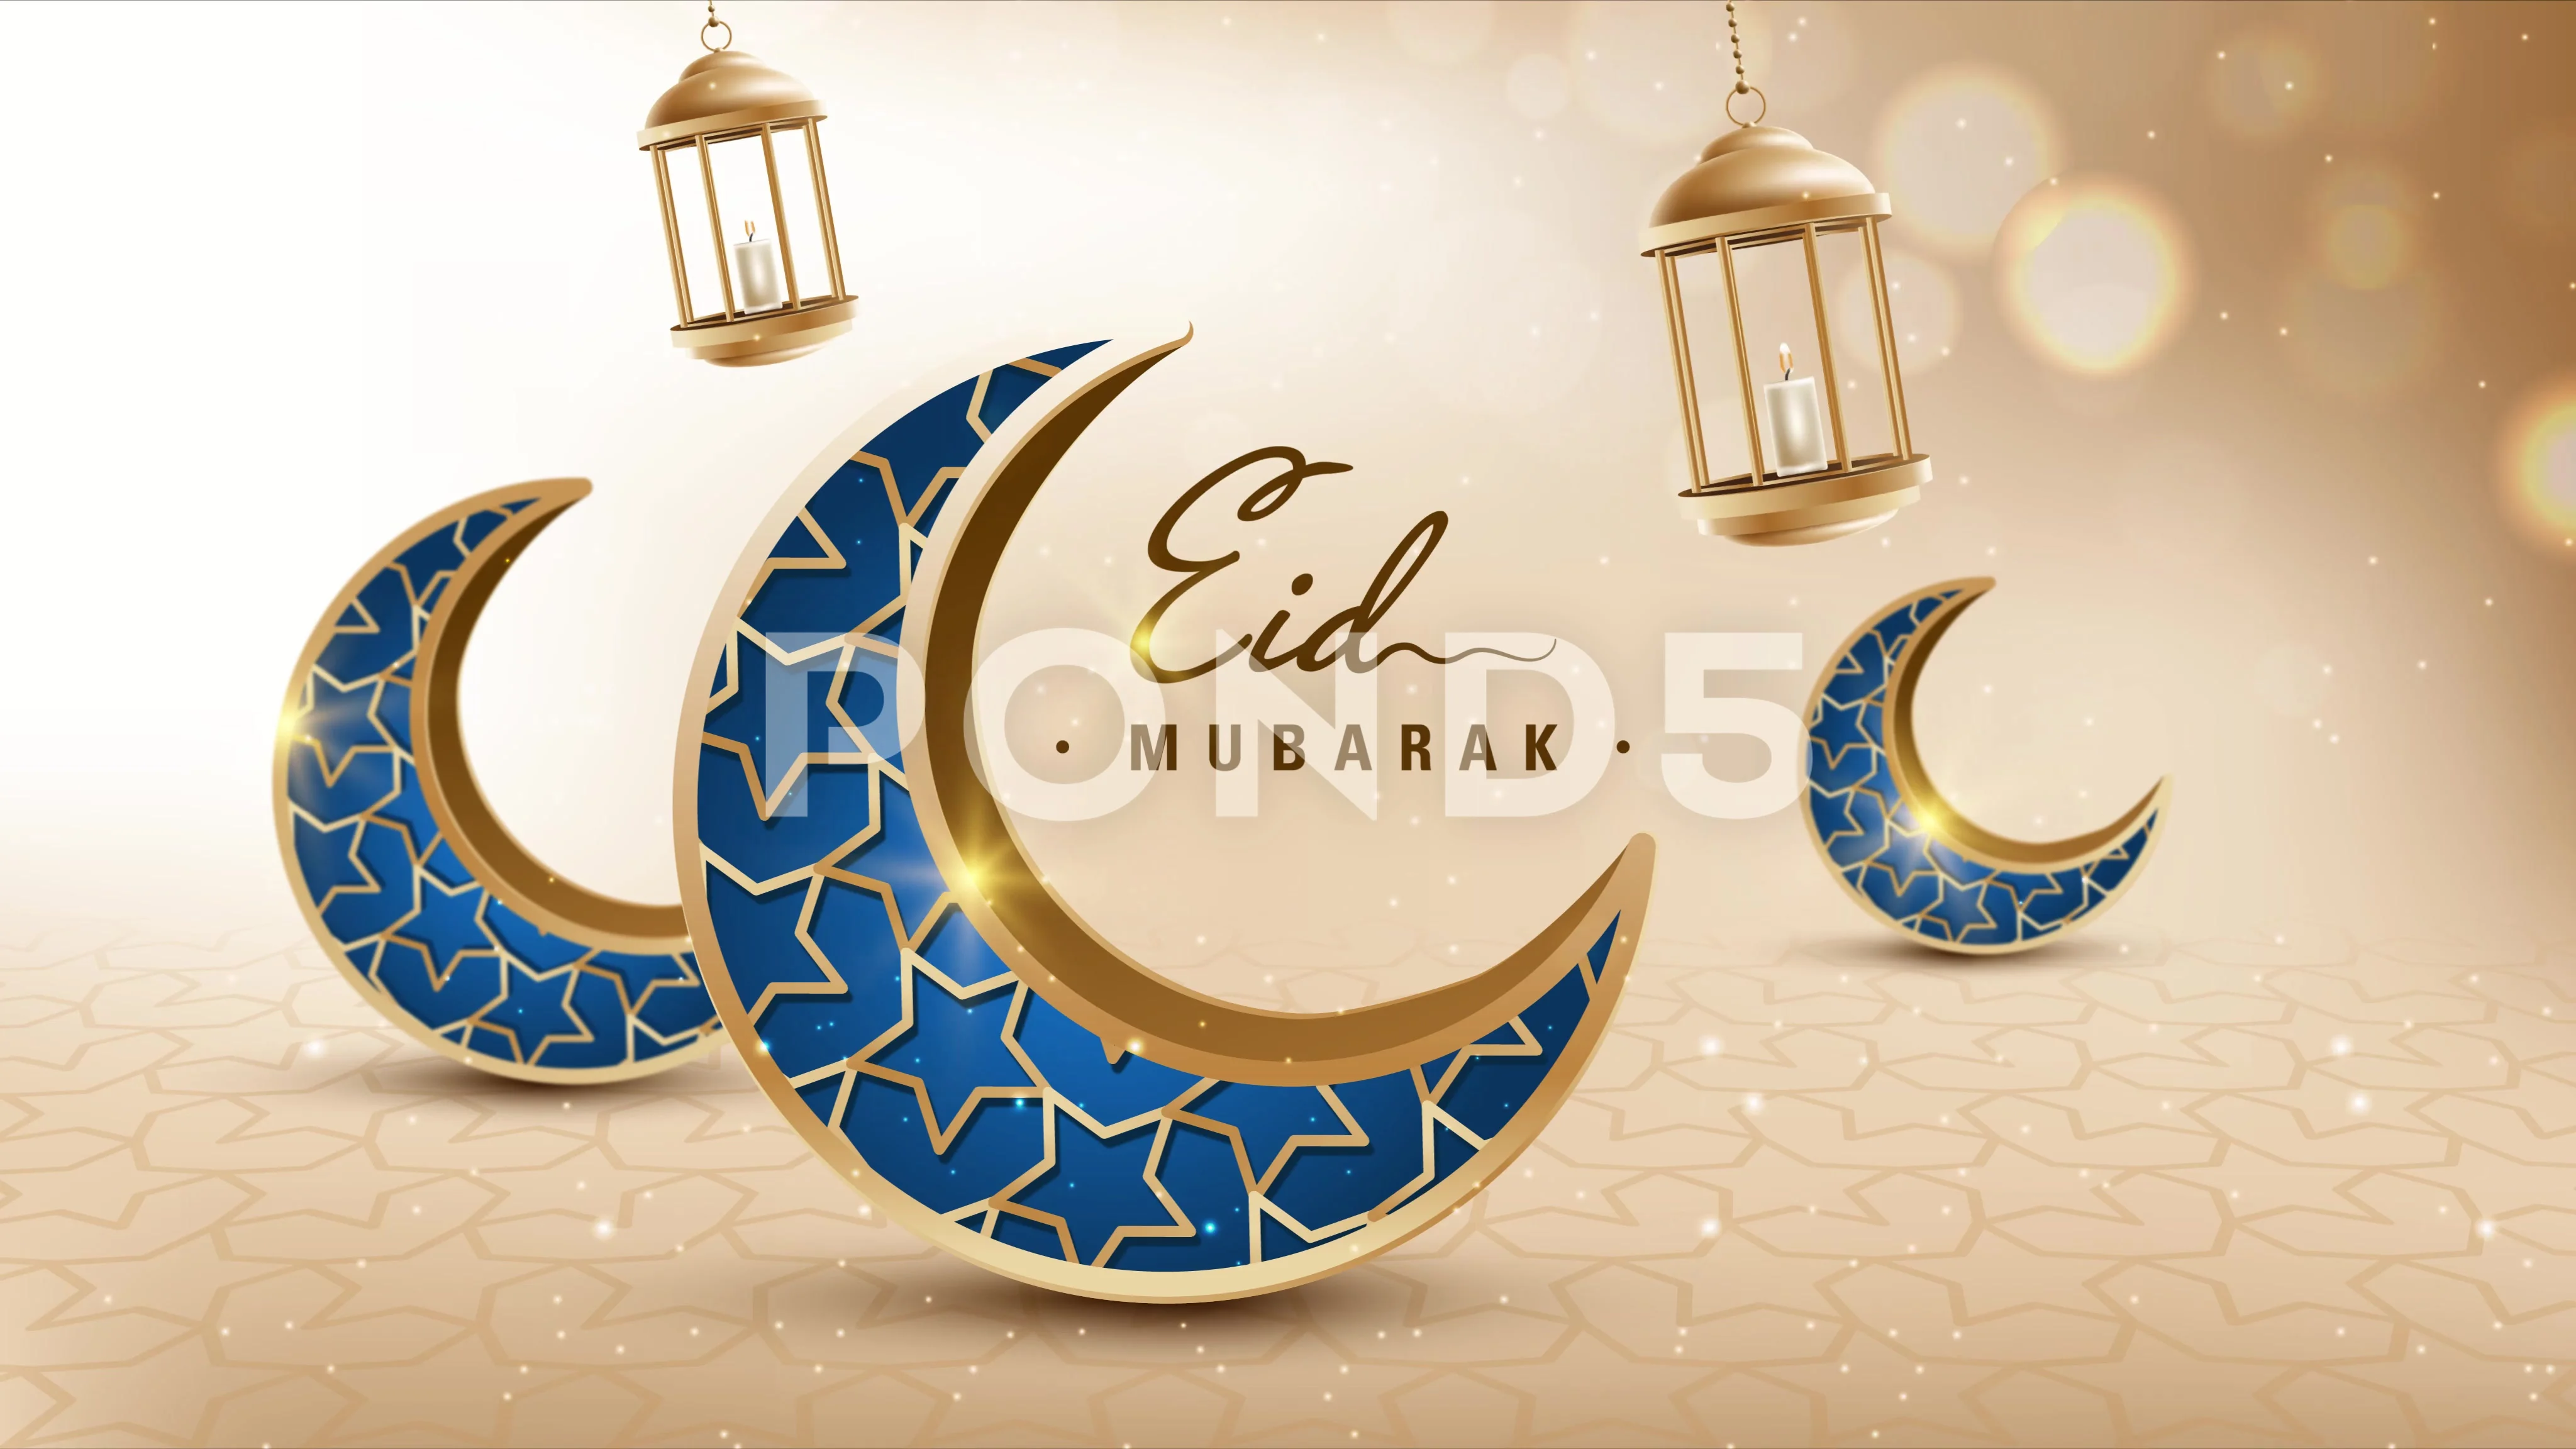 eid mubarak greeting animation. happy ei... | Stock Video | Pond5